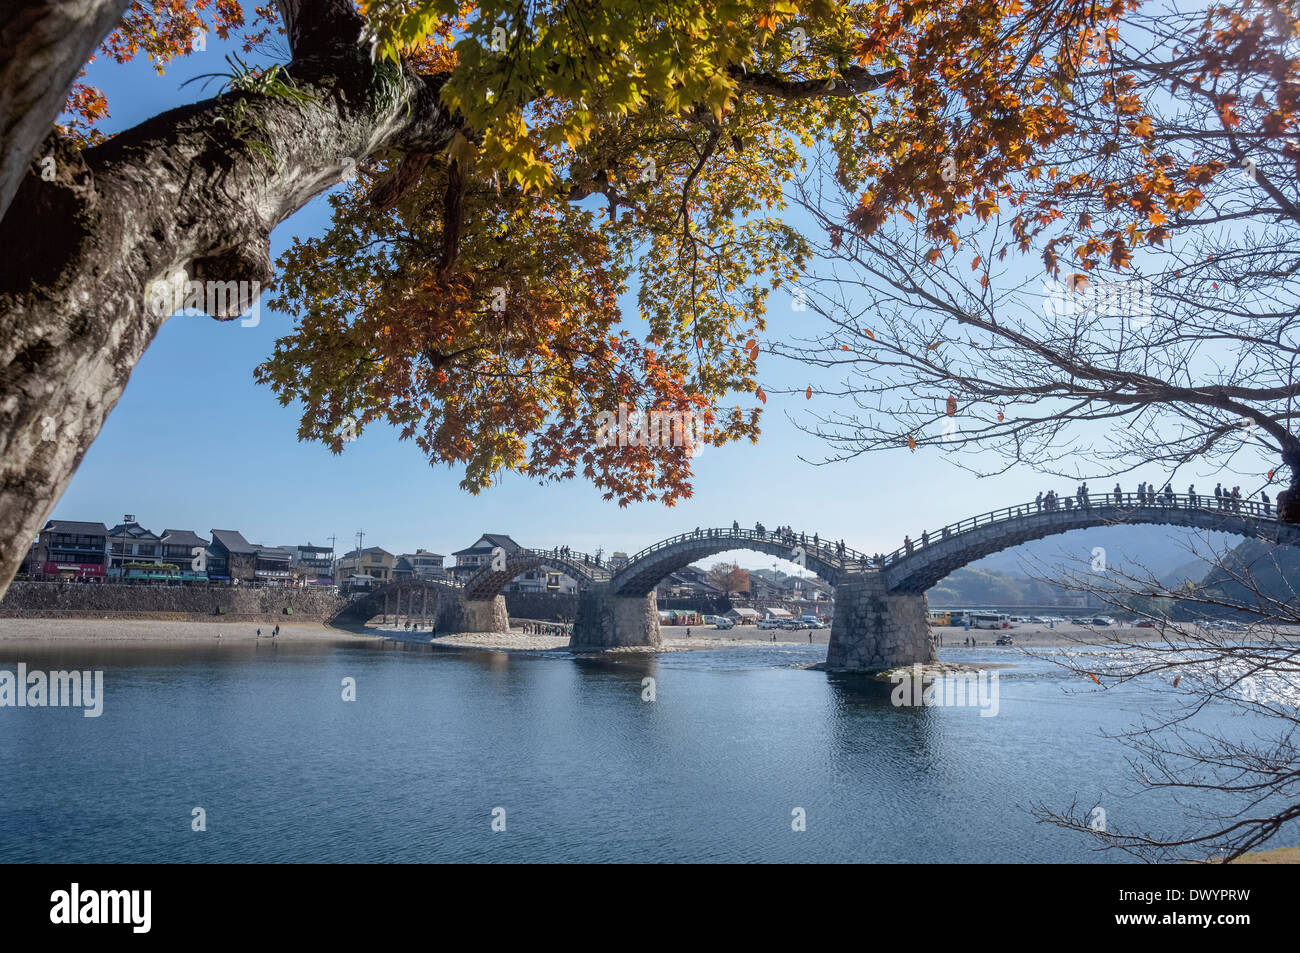 Kintai Bridge Spanning the Nishiki River in Iwakuni, Yamaguchi Prefecture, Japan Stock Photo